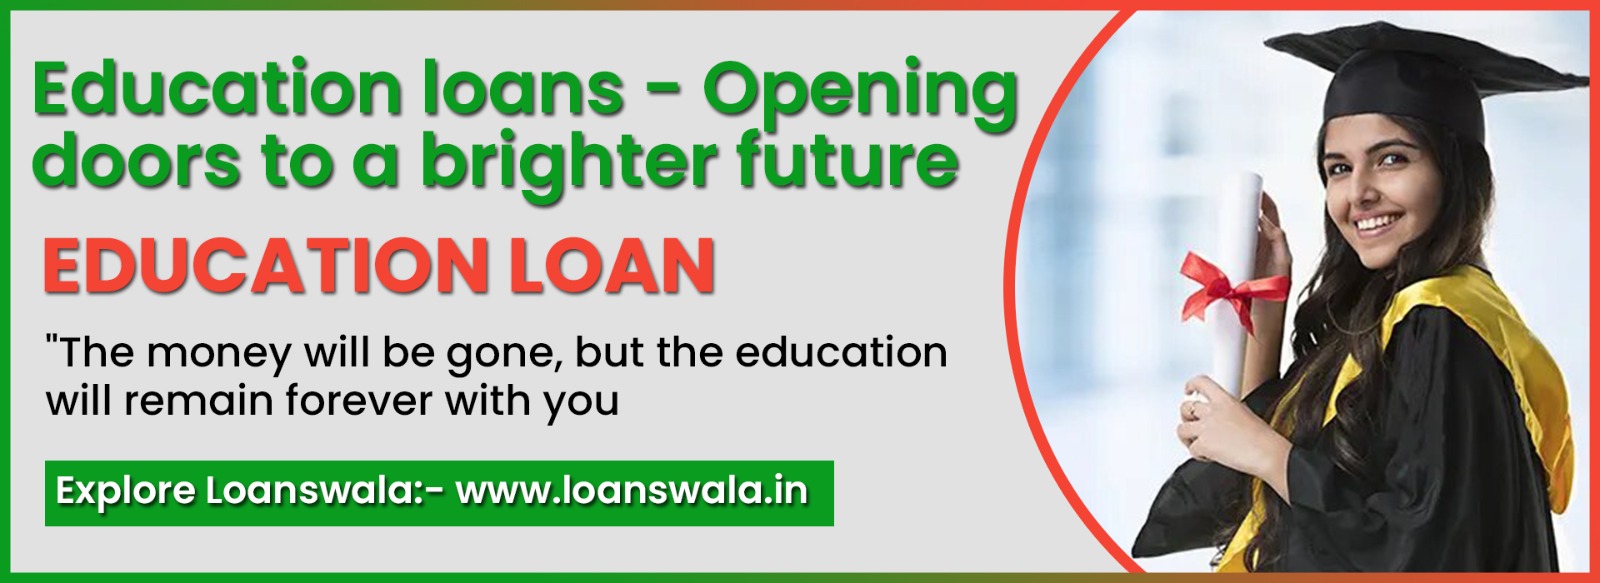 Education Loans